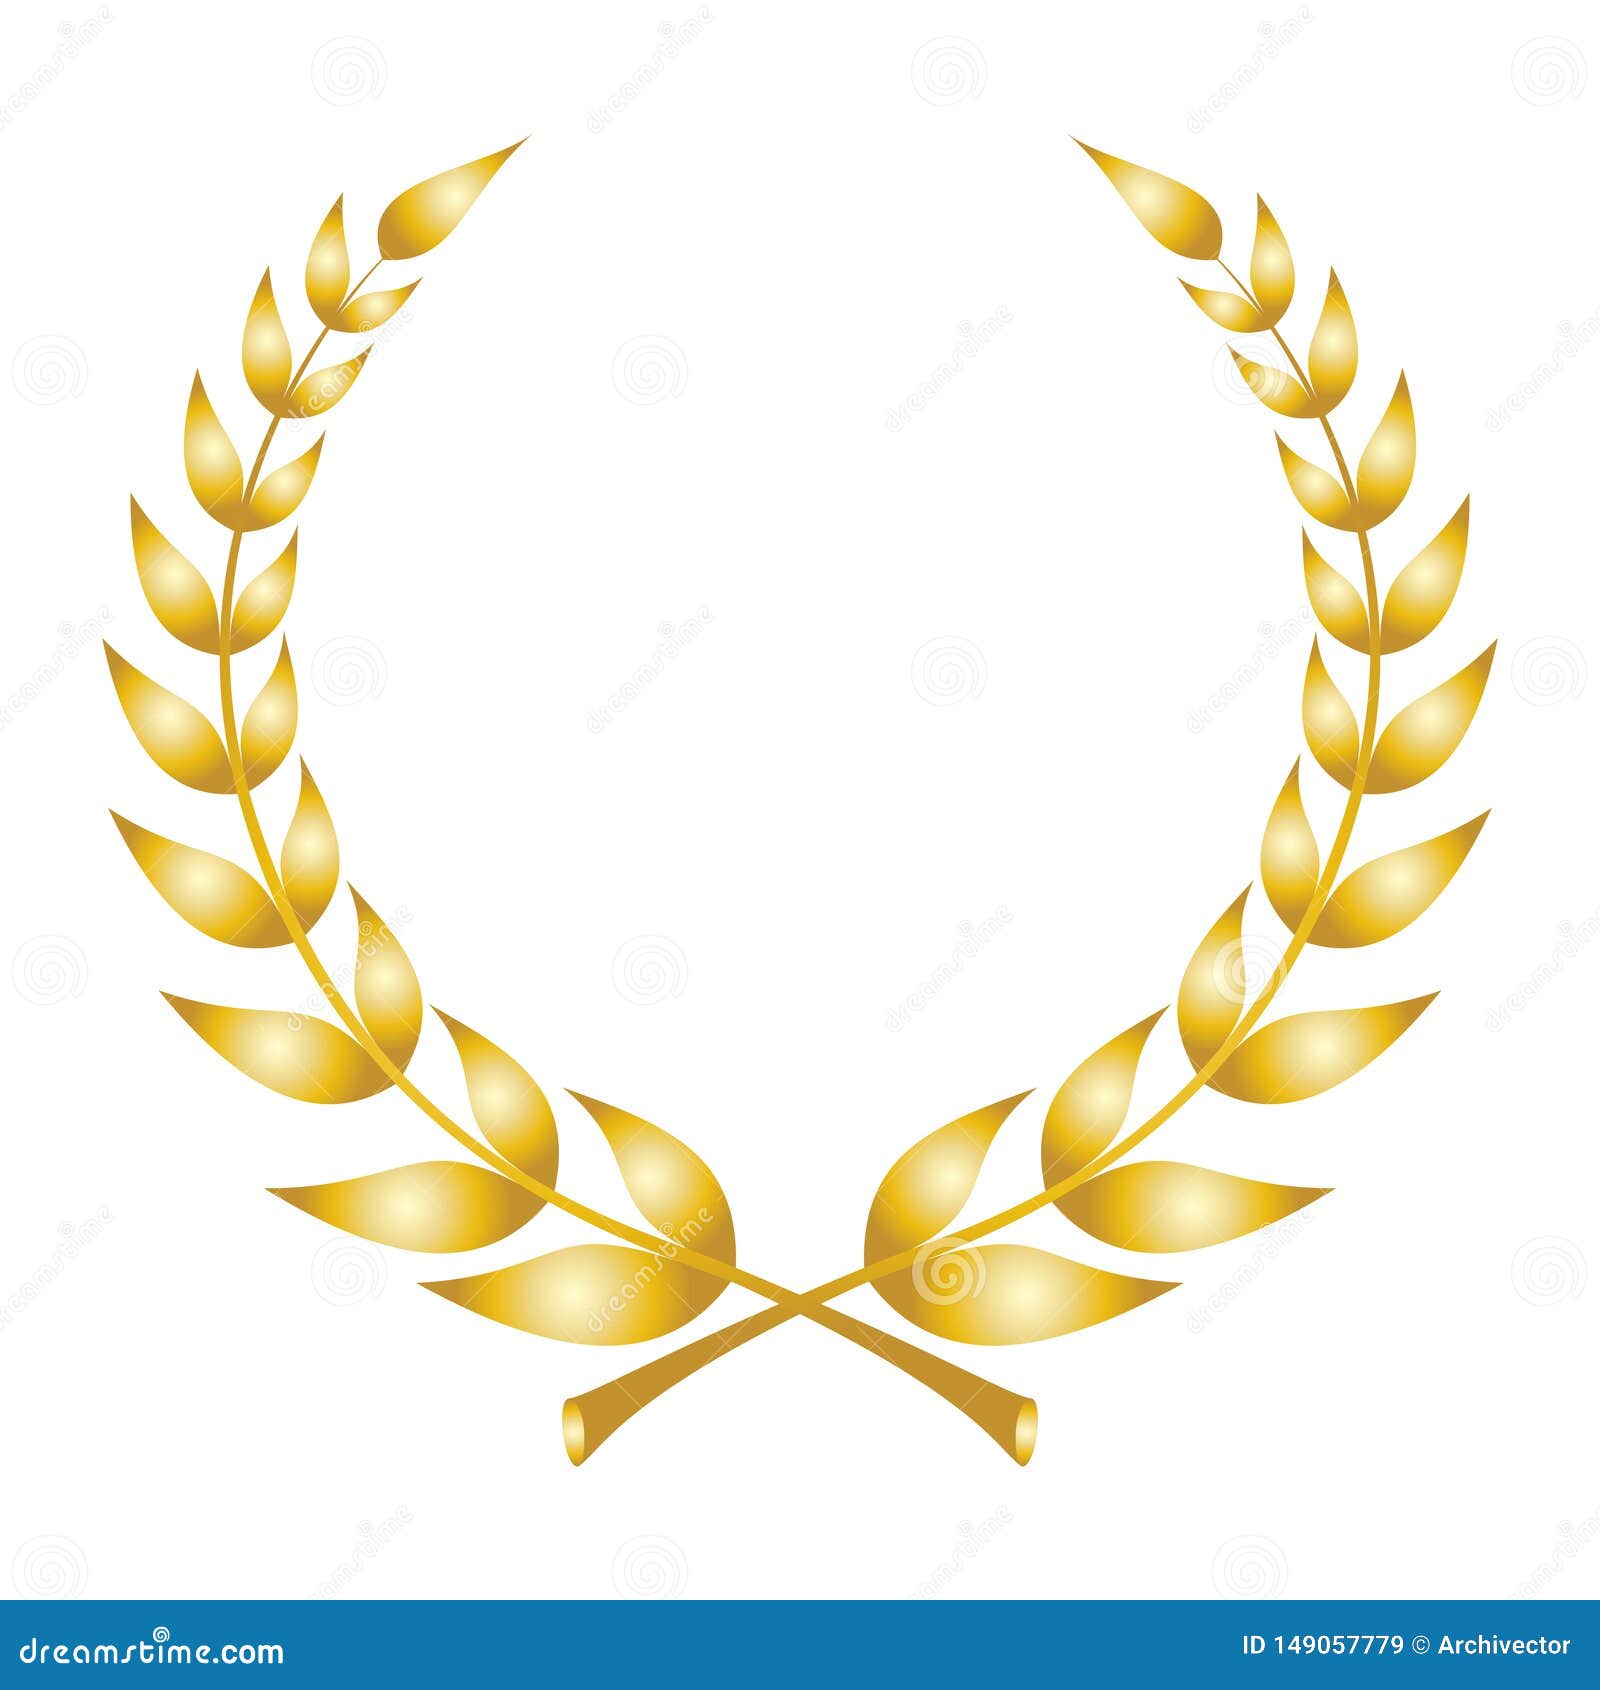 laurel wreath icon. emblem made of laurel branches